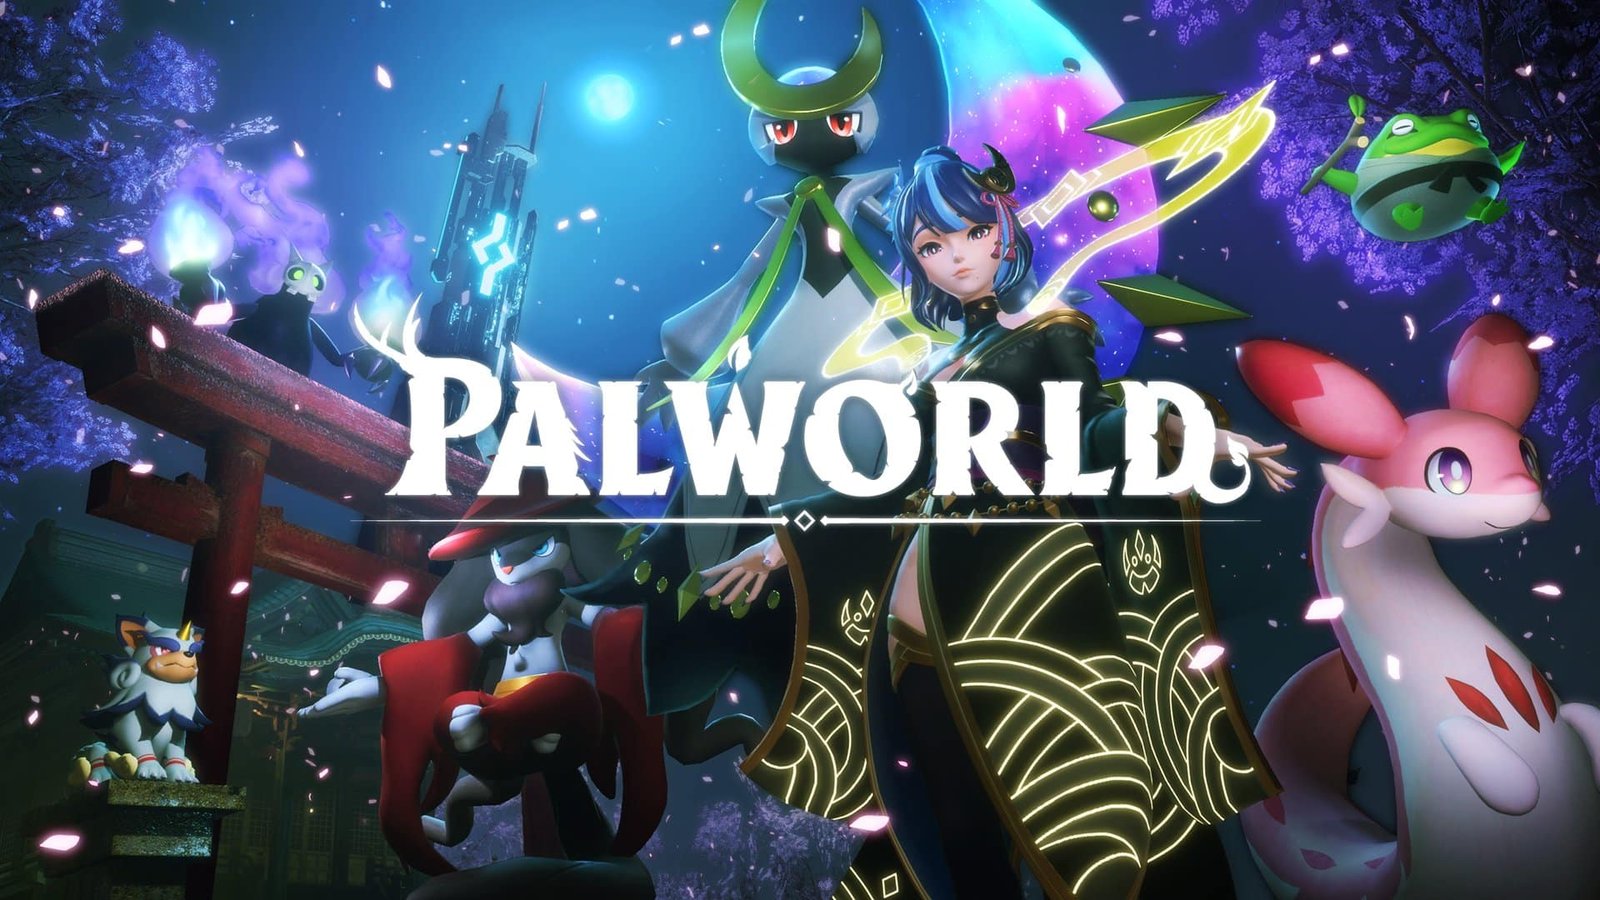 Palworld Nintendo Switch